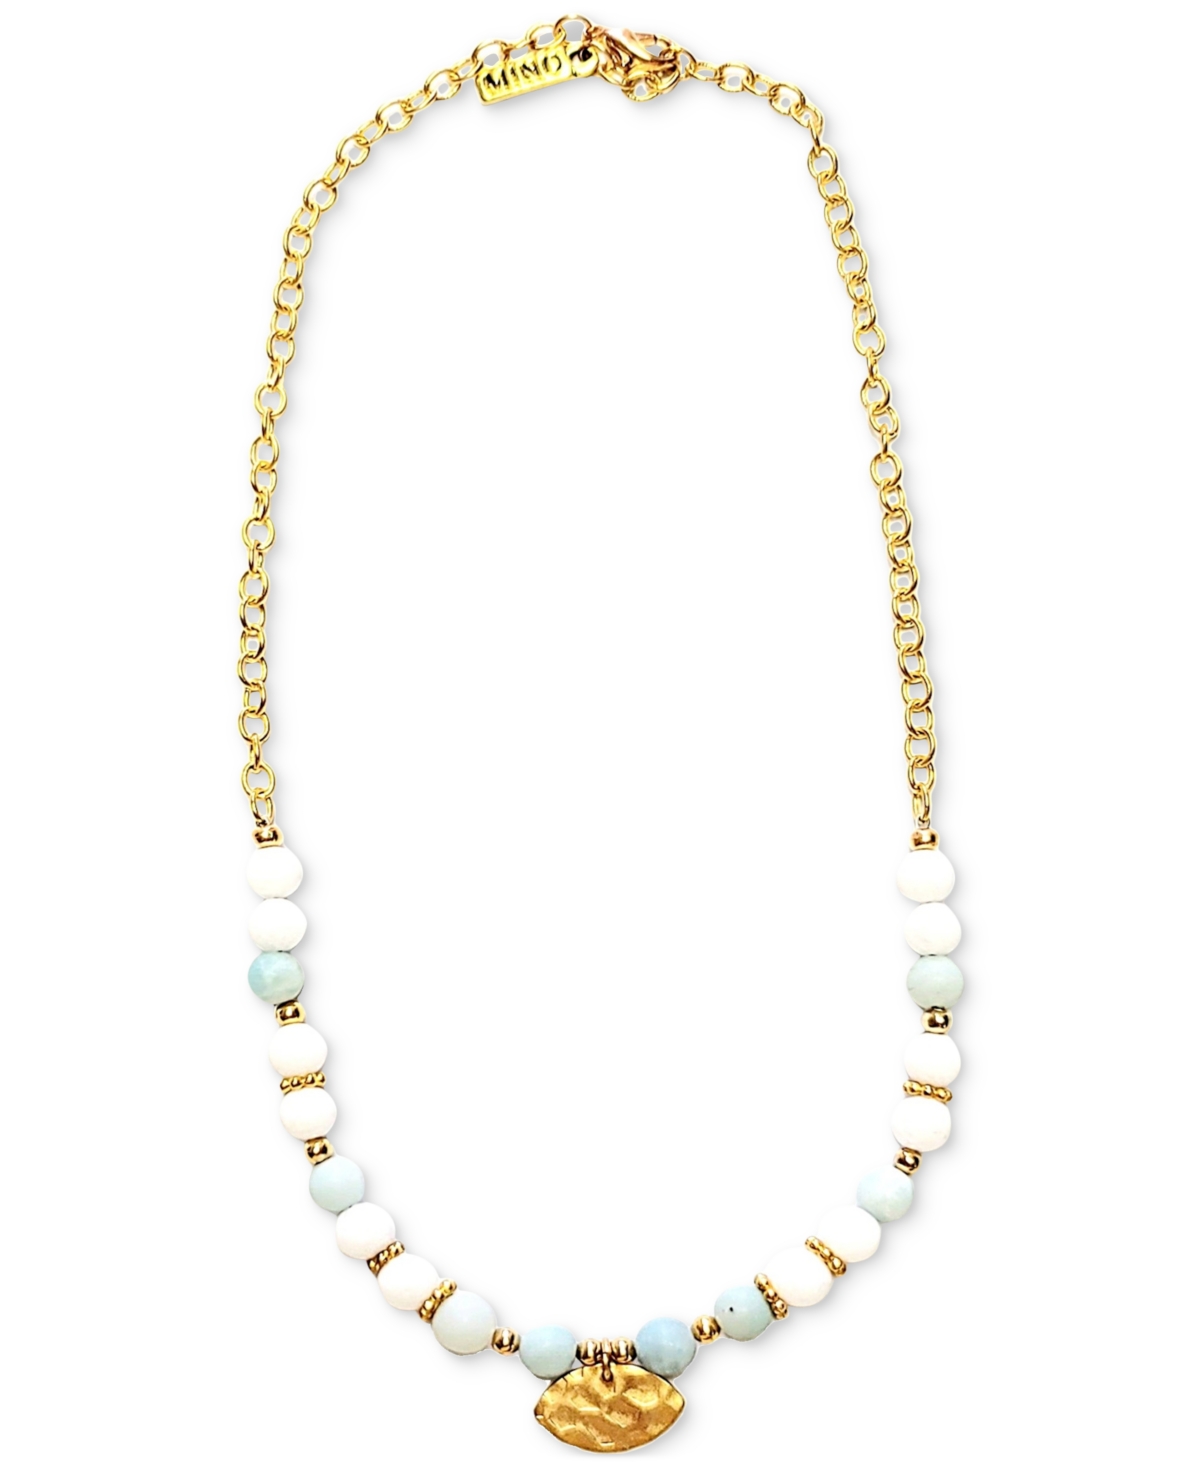 Minu Jewels Gold-Tone Gemstone Beaded Pendant Necklace, 16" + 1" extender